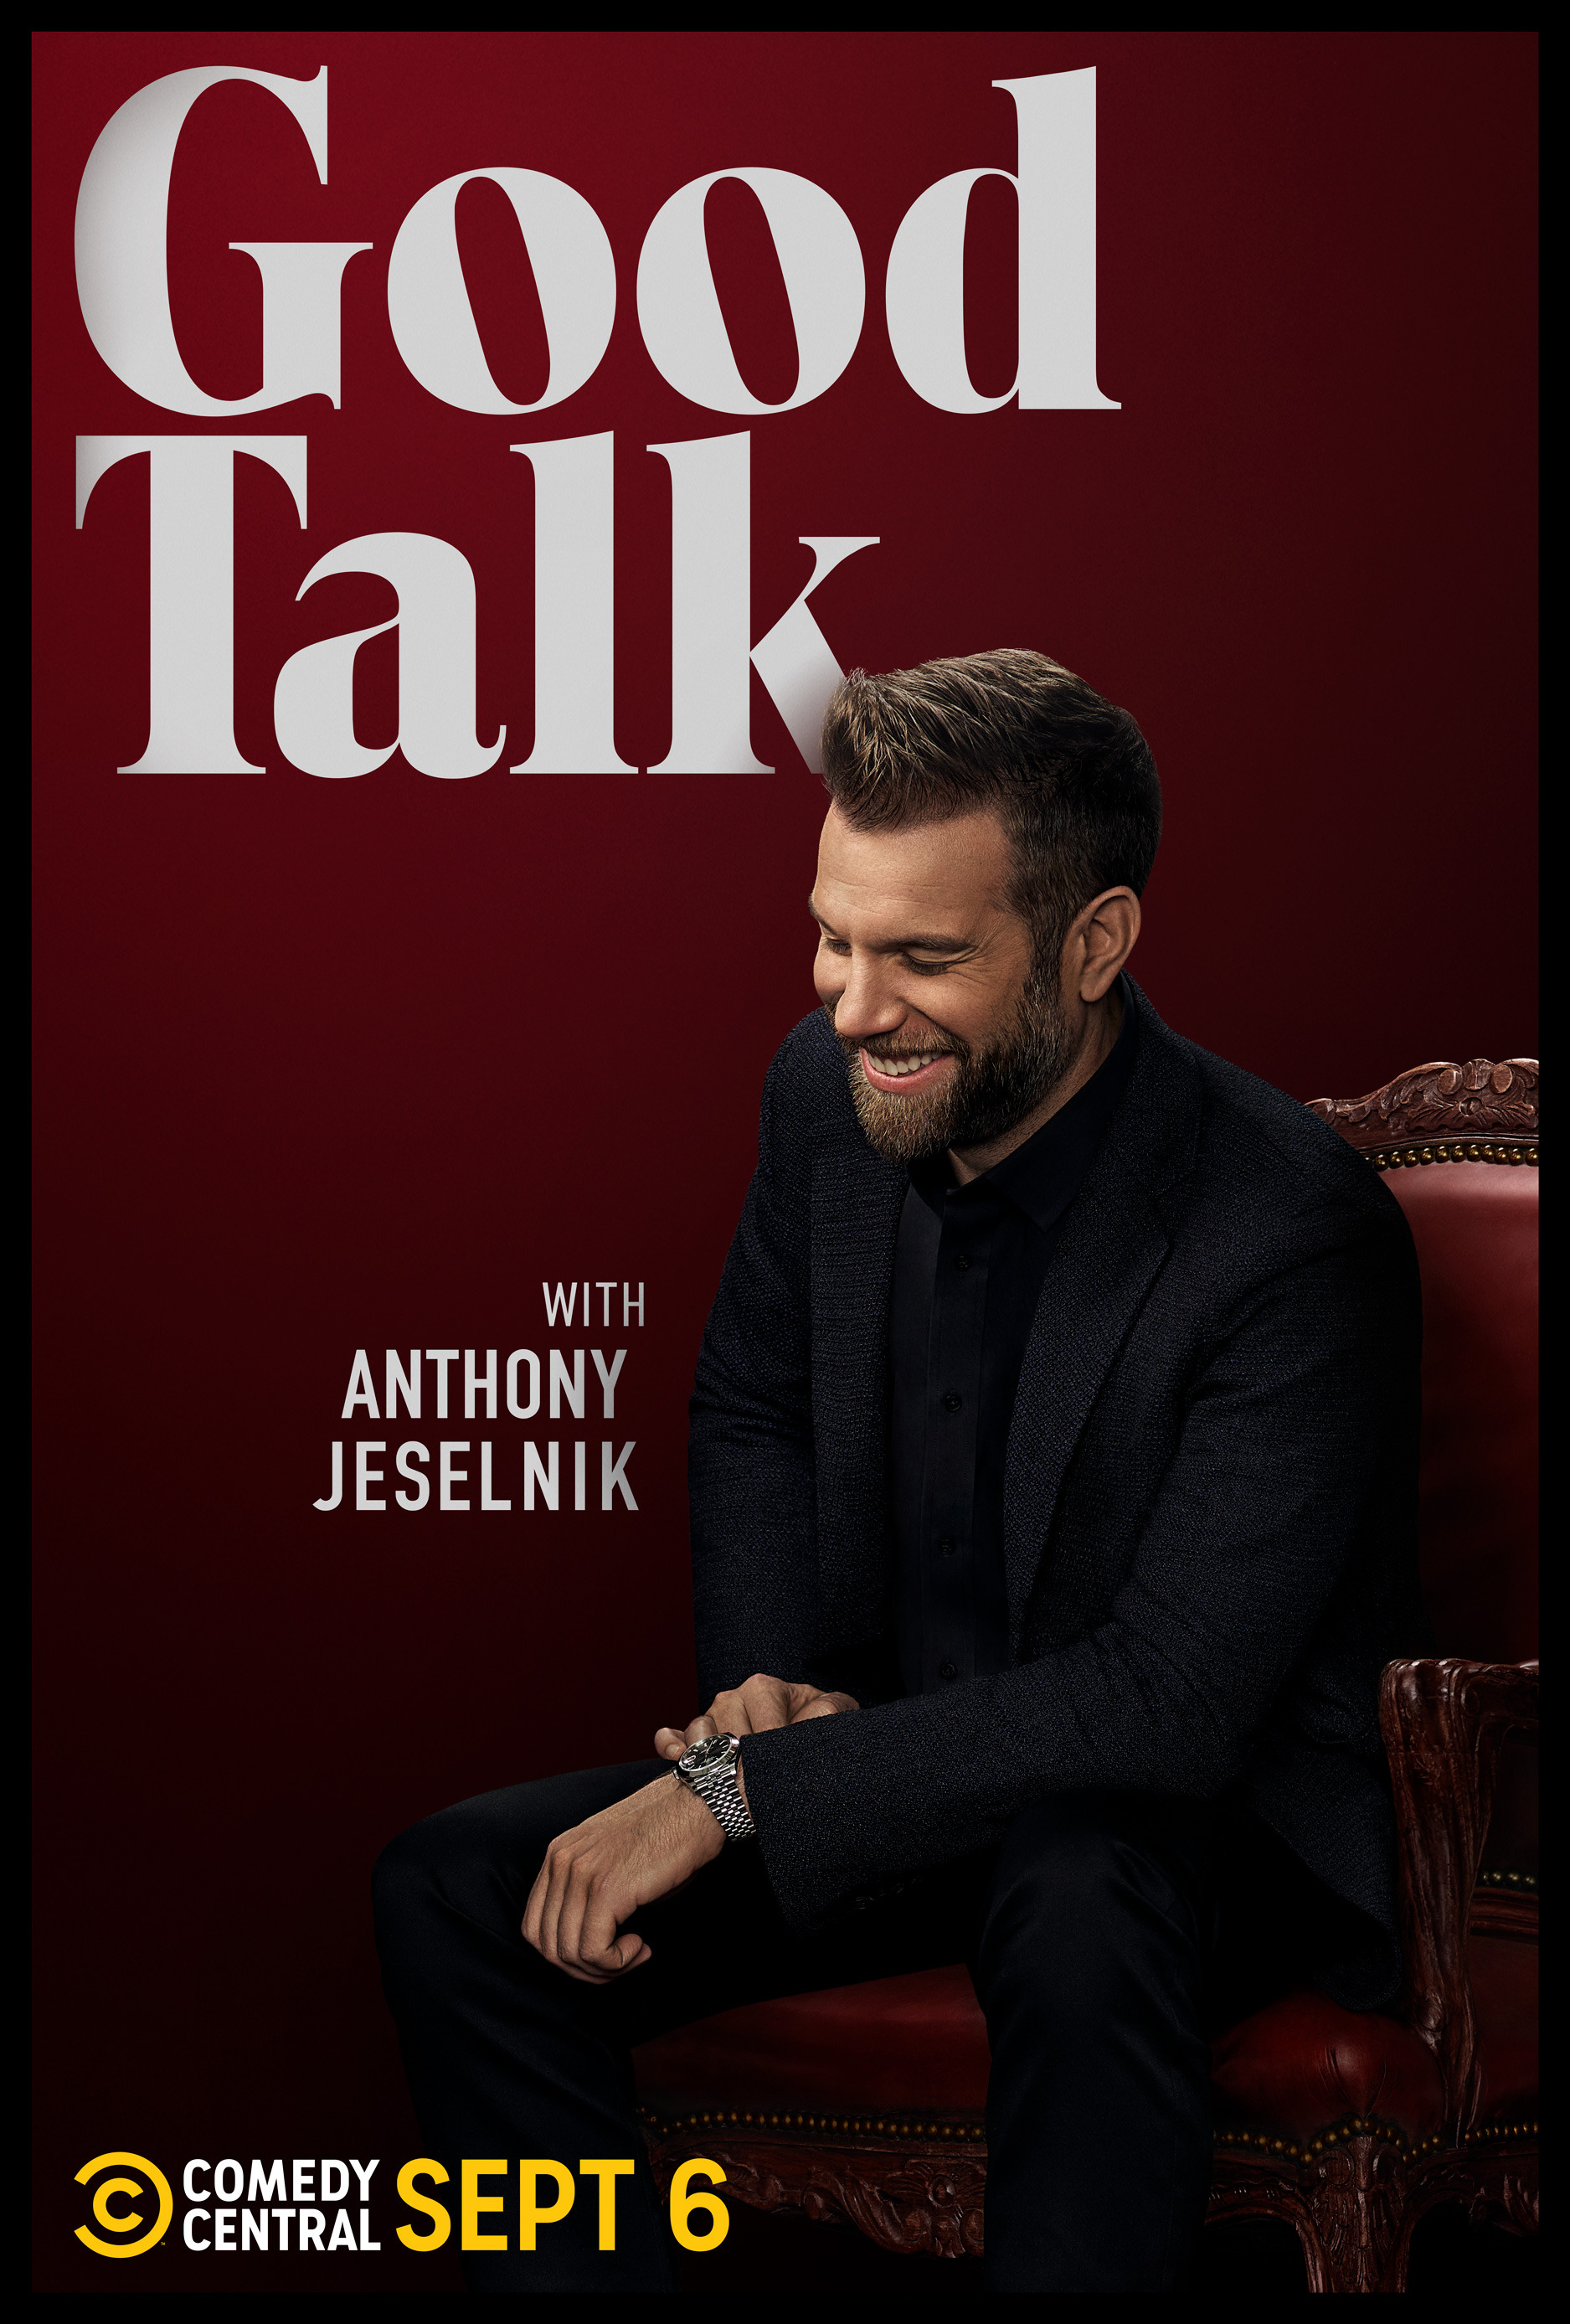 Mega Sized TV Poster Image for Good Talk with Anthony Jeselnik 